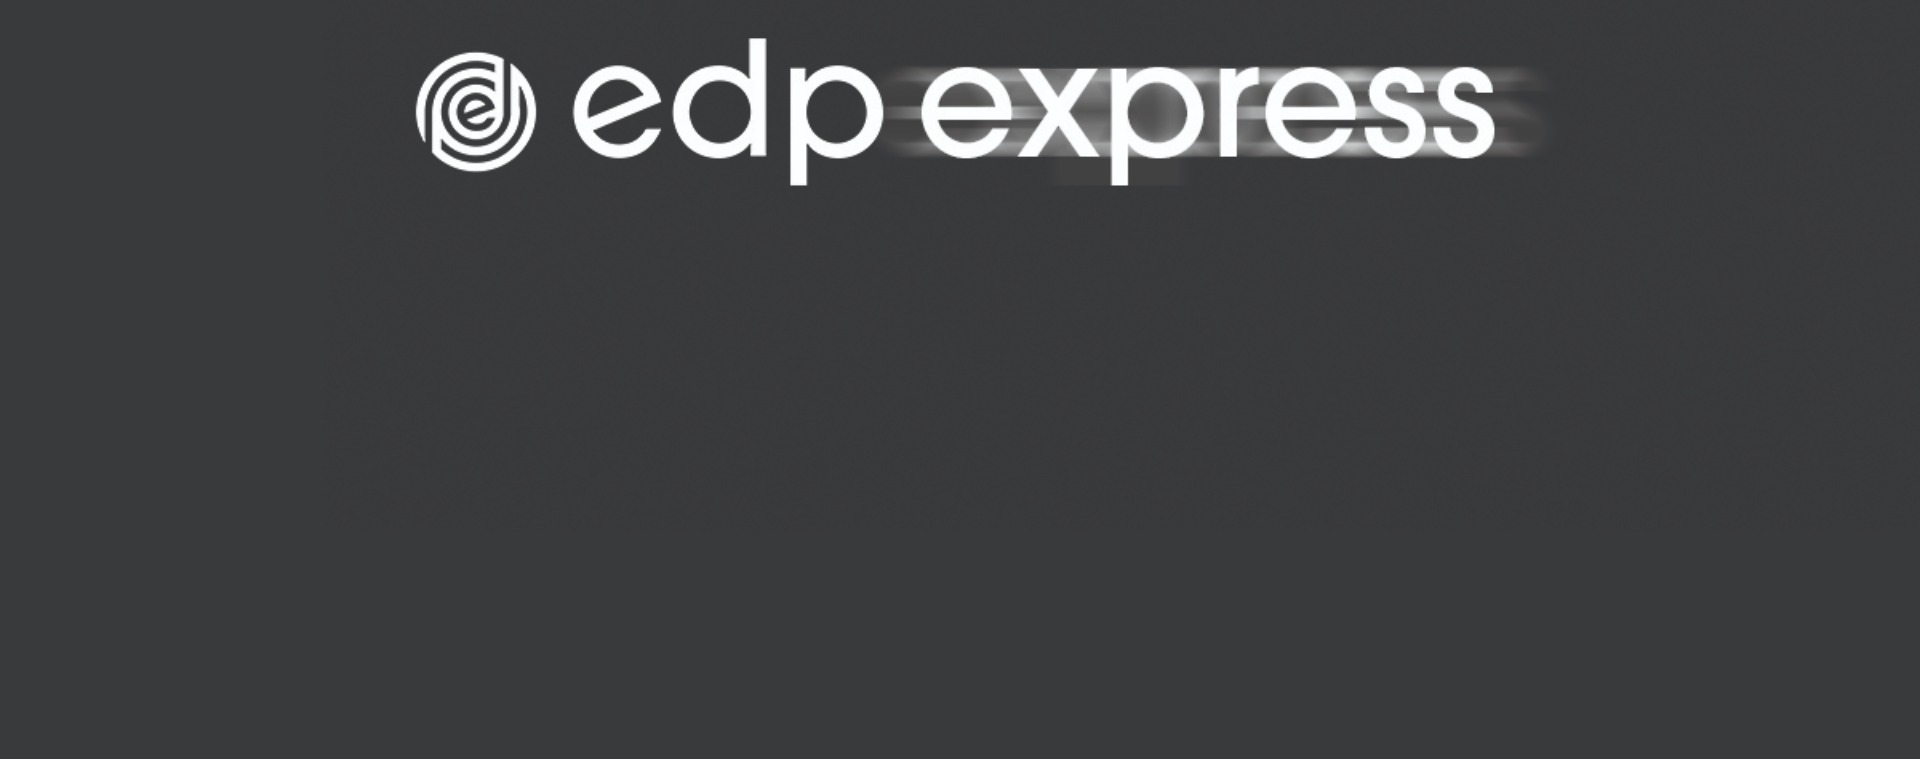 edp express